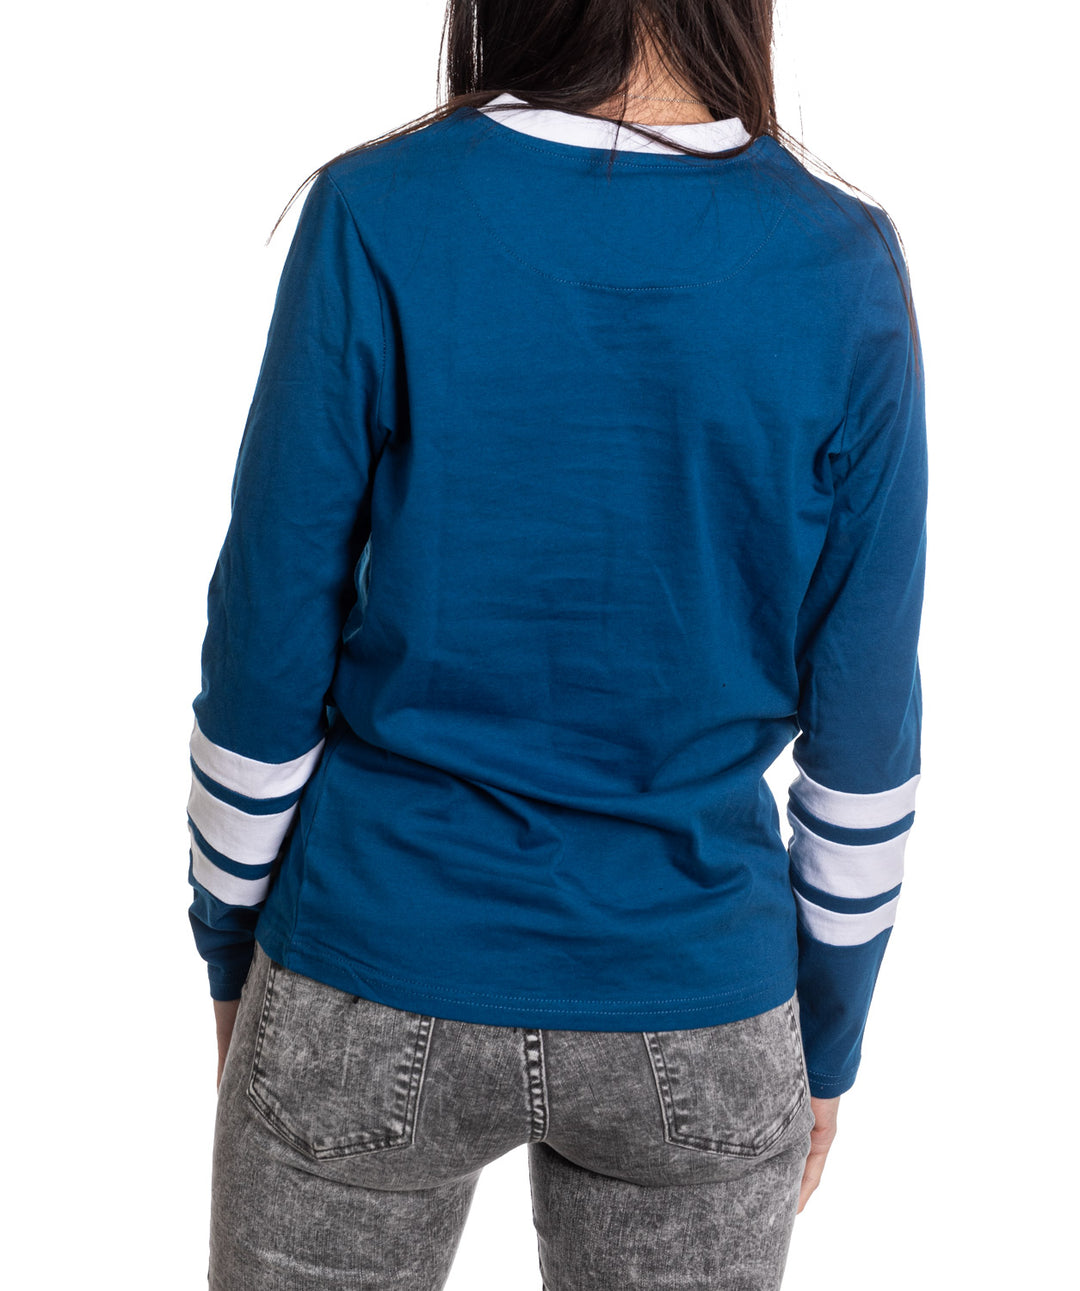 Toronto Maple Leafs Women's V-Neck Varsity Long Sleeve Shirt